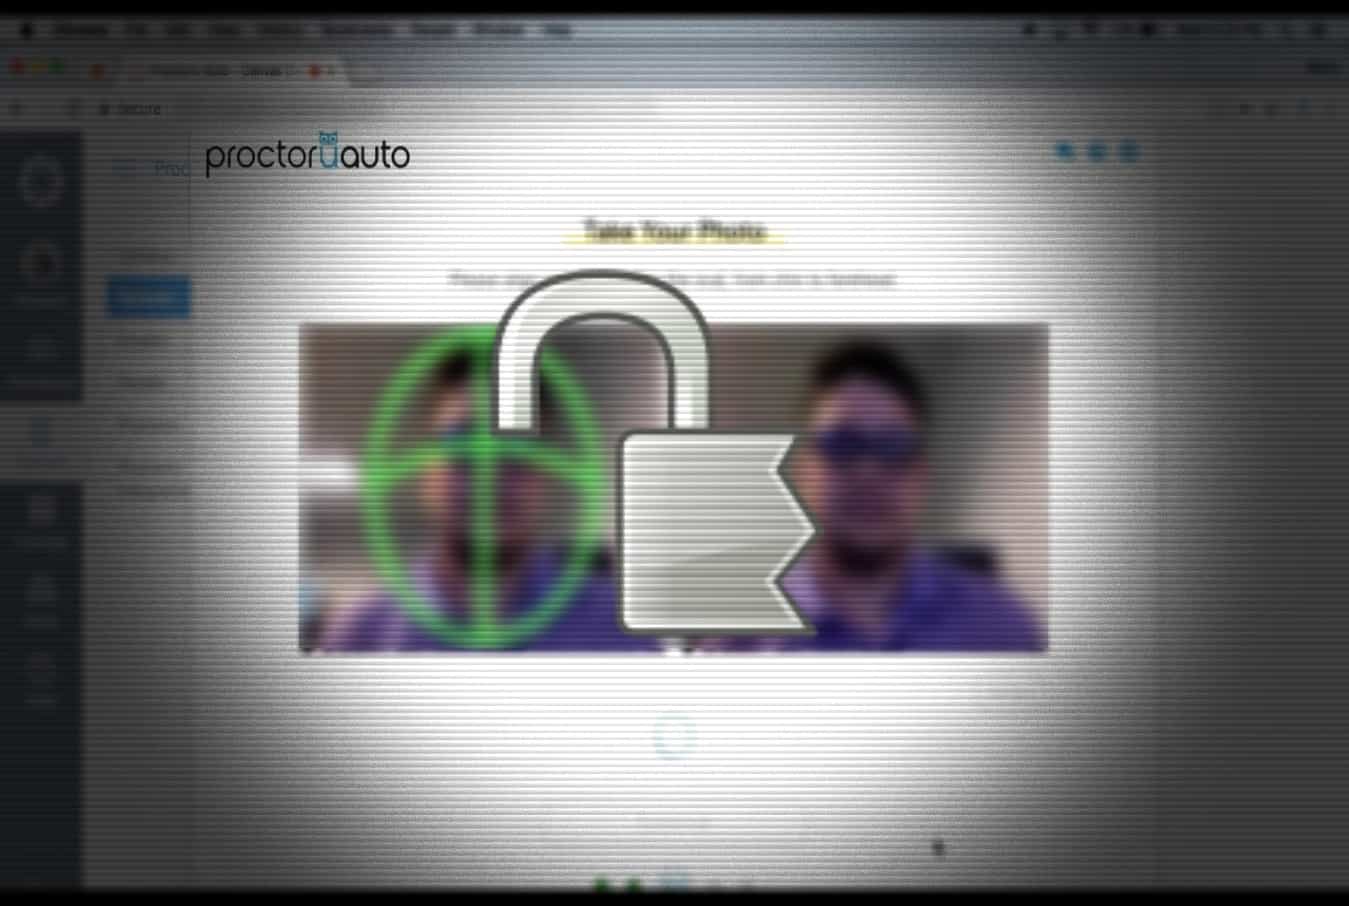 Online exam tool ProctorU suffers data breach; 444,000 user accounts leaked